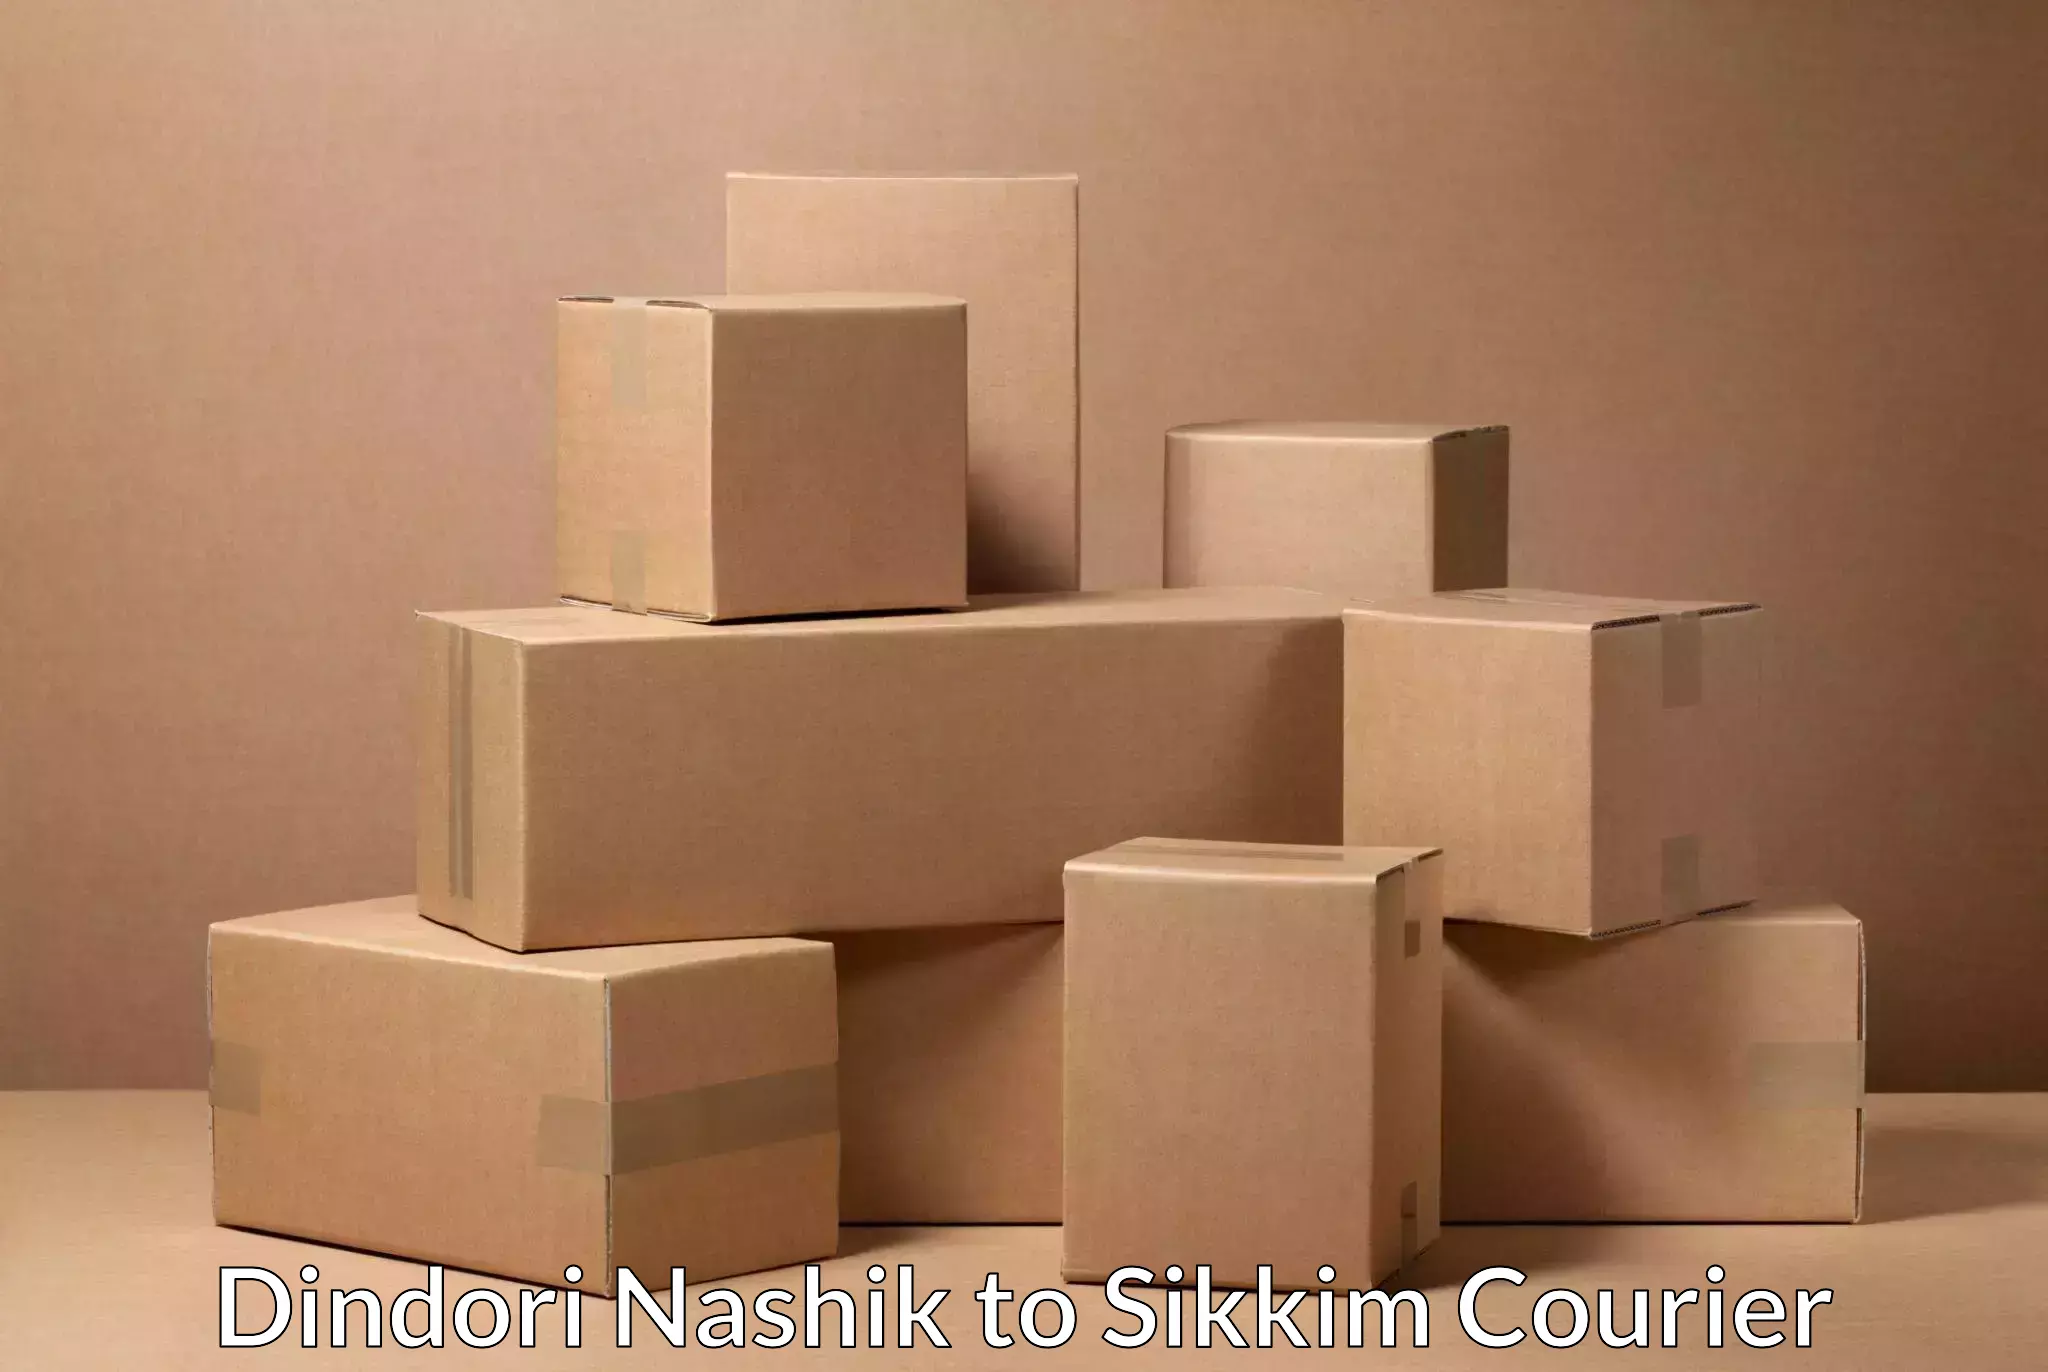 Flexible delivery schedules Dindori Nashik to Sikkim